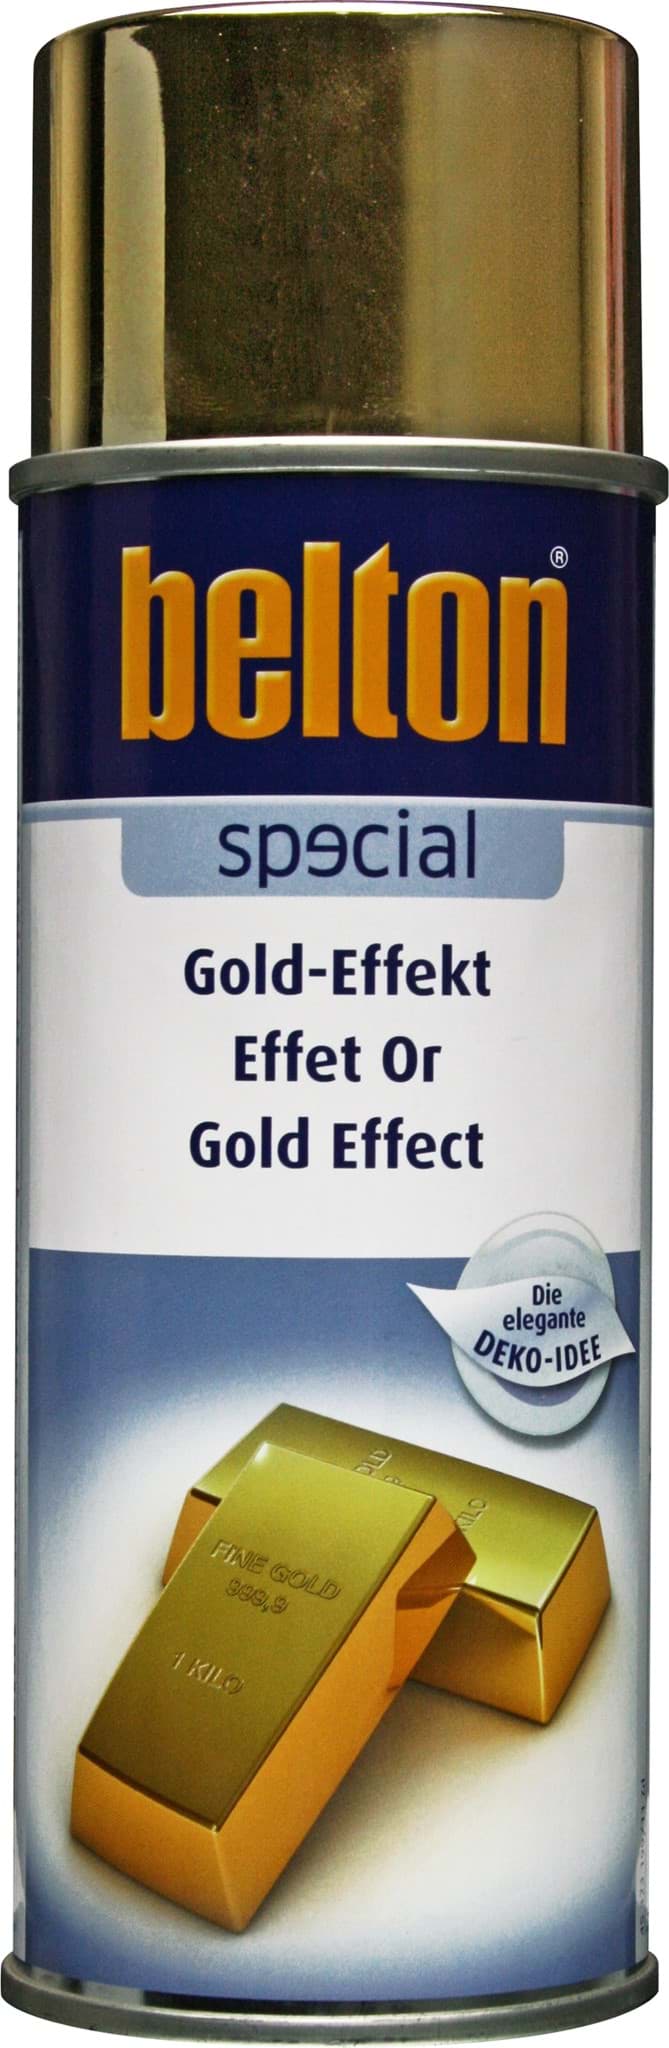 Picture of Belton special Gold Effekt Spray